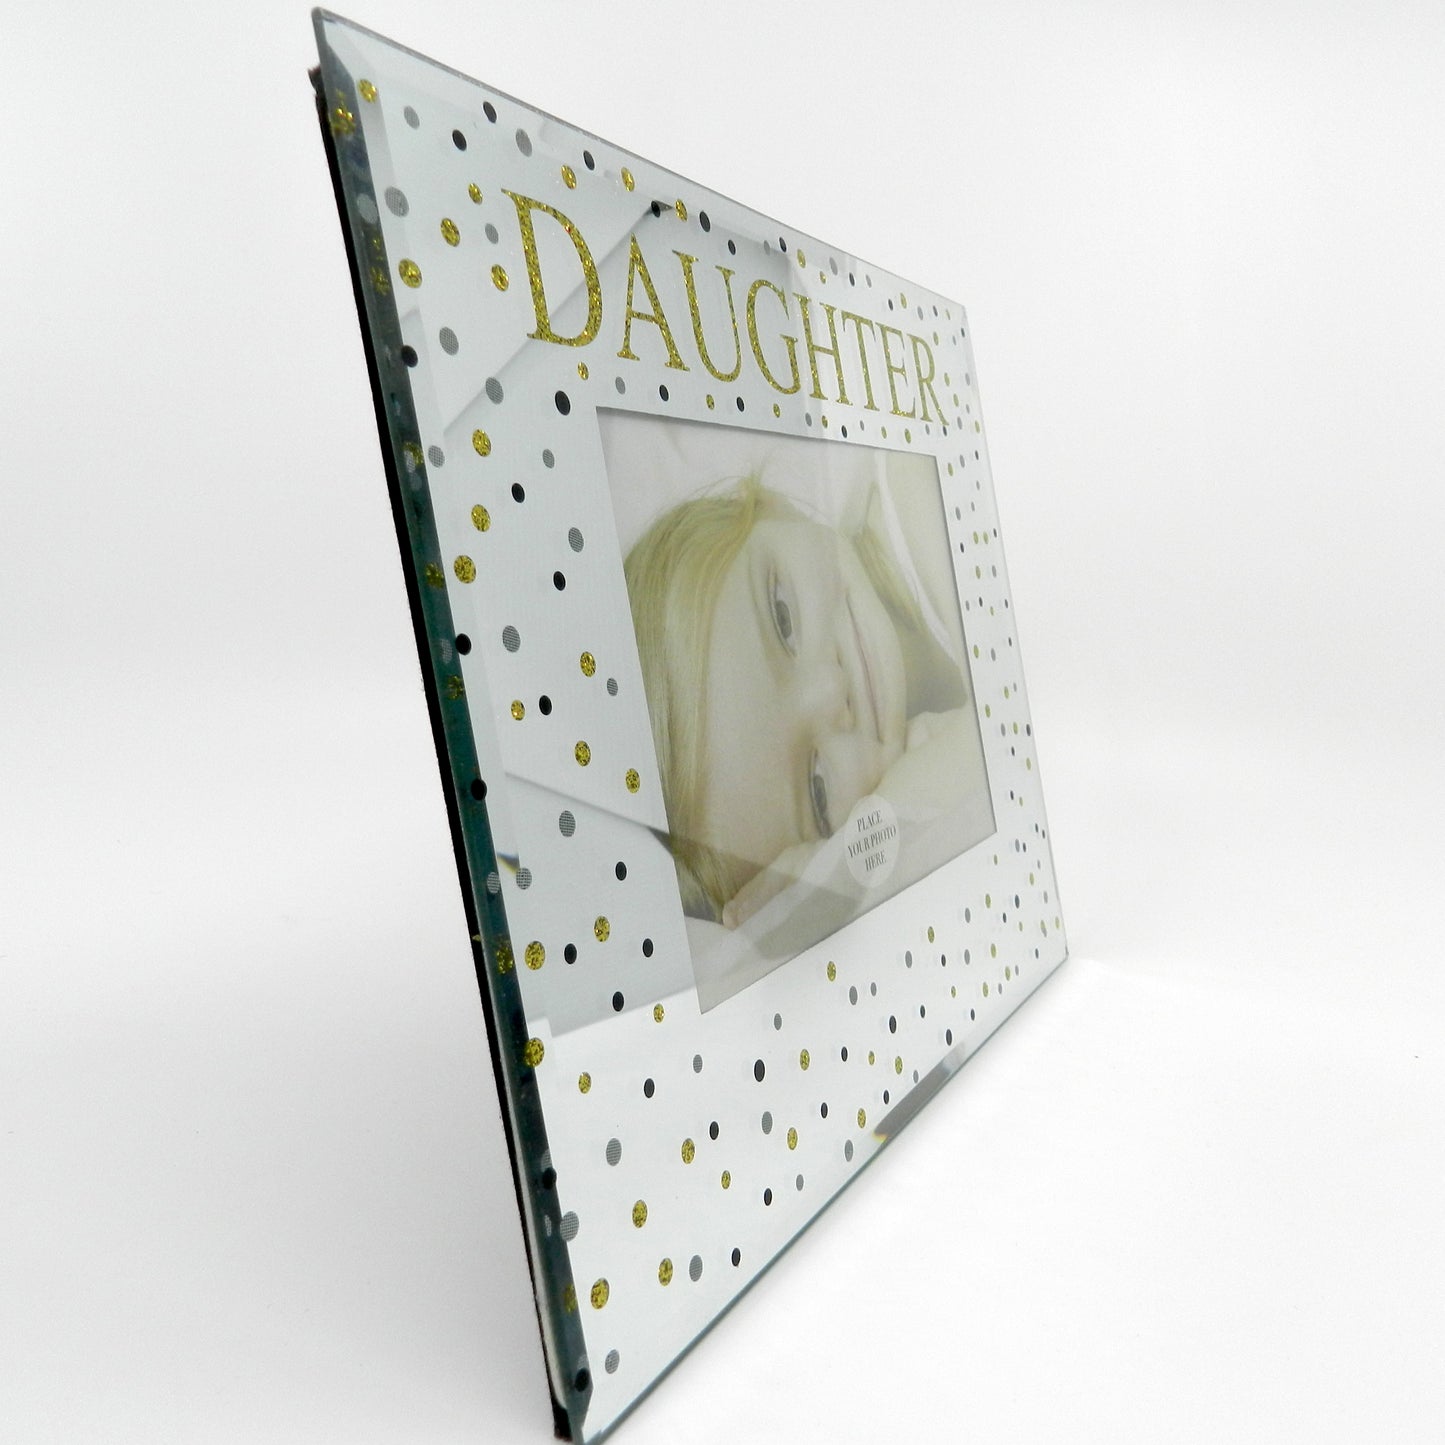 Daughter Photo Frame Glass Mirror - 17 x 23cm - Landmark Concepts